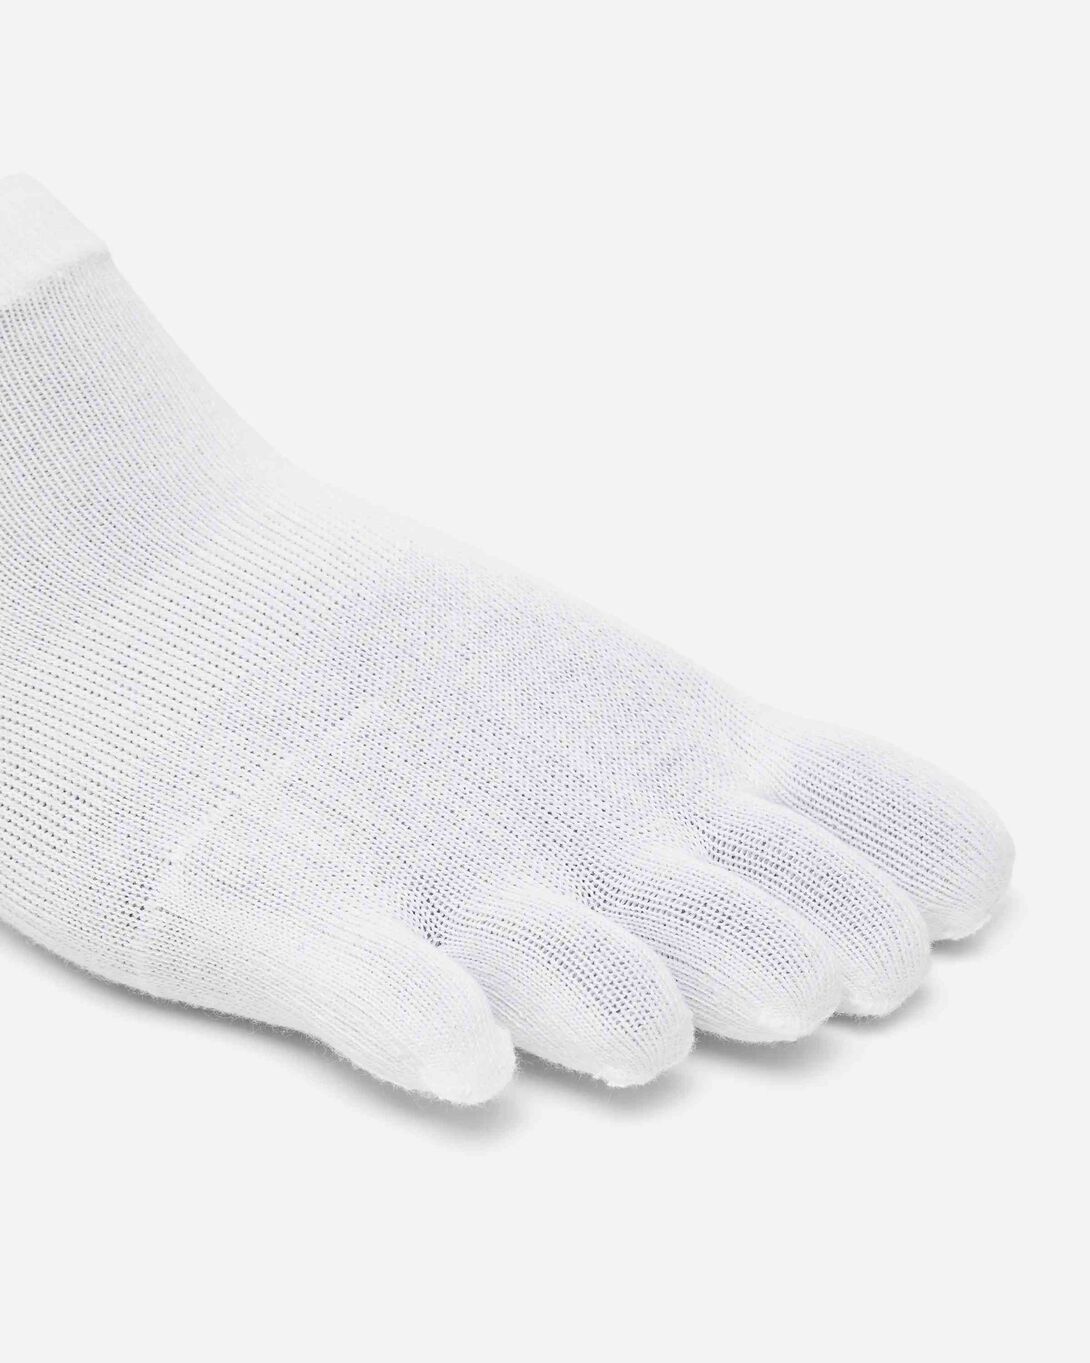 Vibram Five Fingers No Show Toe Socks - White - Red Dot Running Company